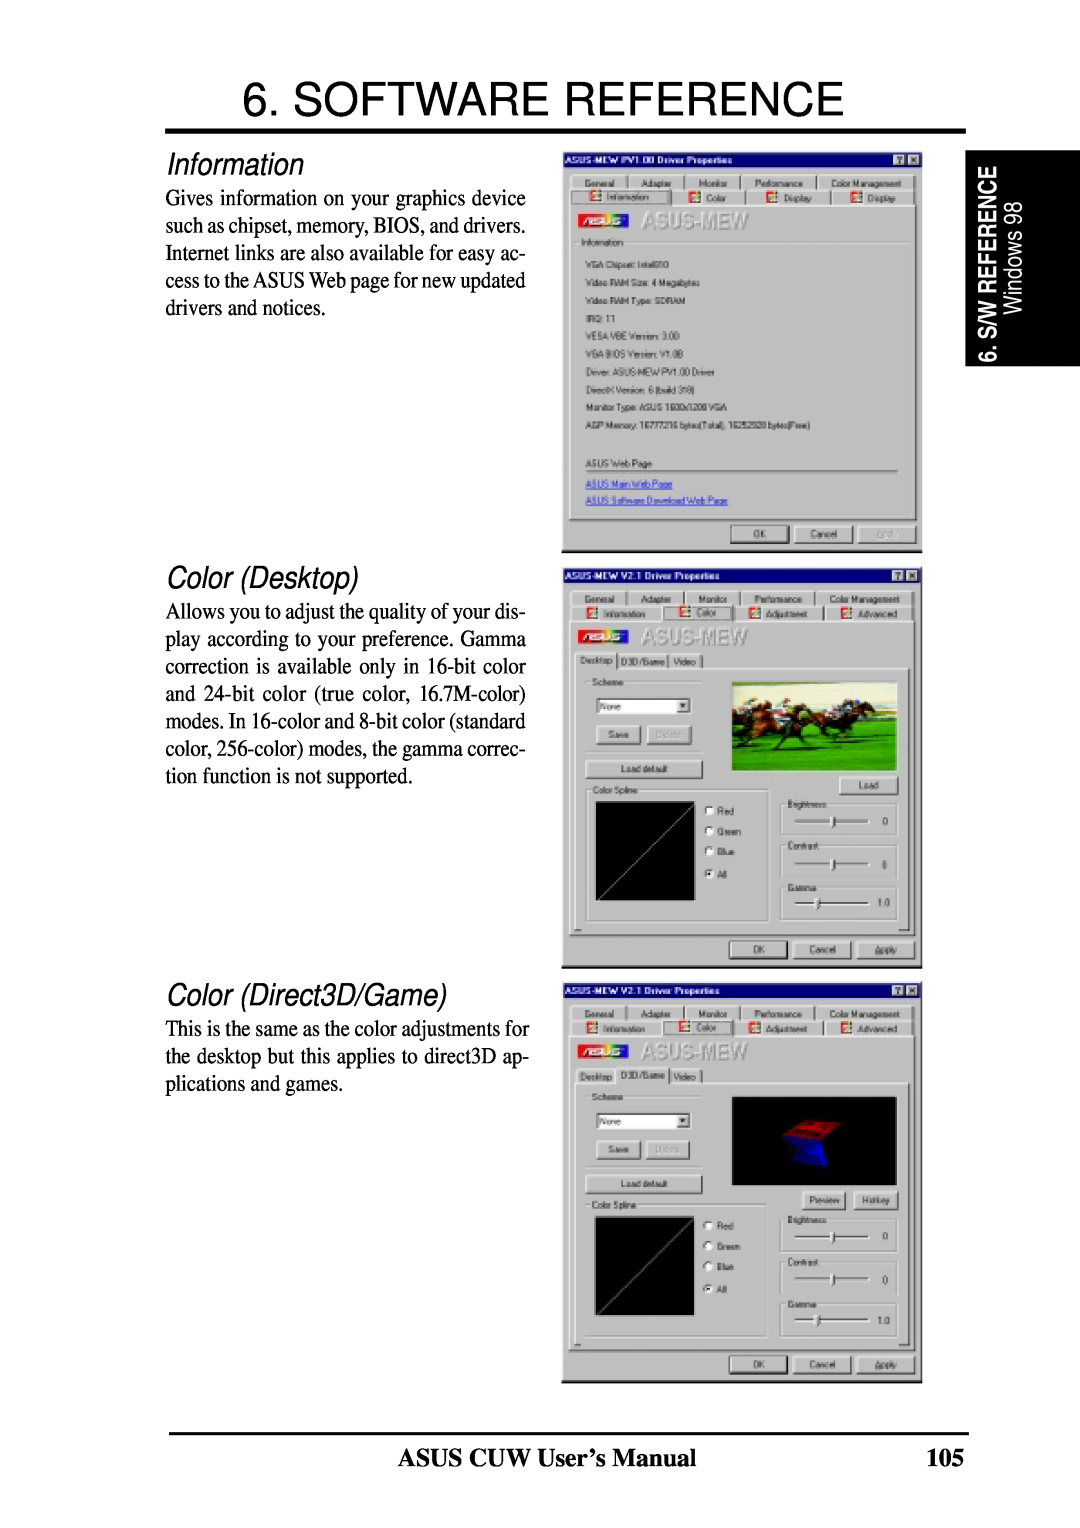 Asus 810 user manual Information, Color Desktop, Color Direct3D/Game, Software Reference, S/Wreference, Windows98 